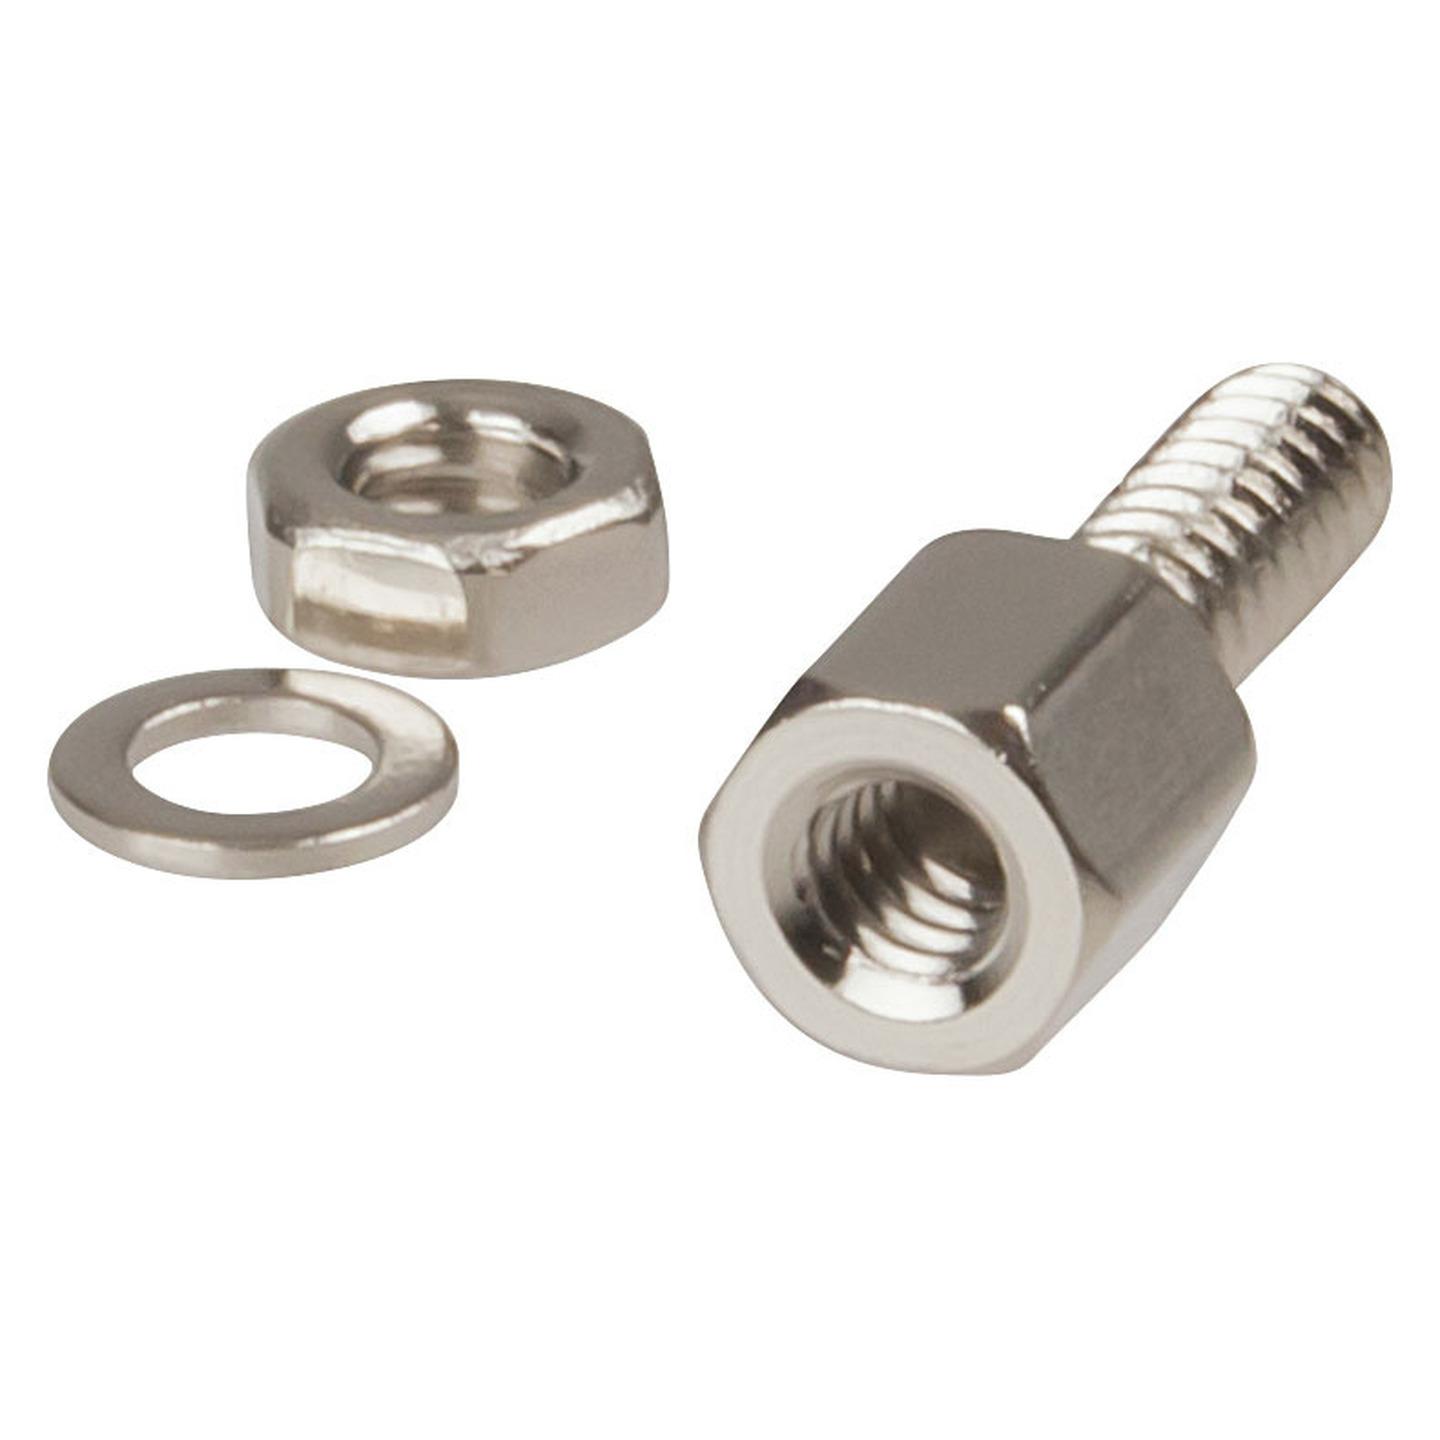 13mm Locking Nut Set for D Connectors - 2 Pack